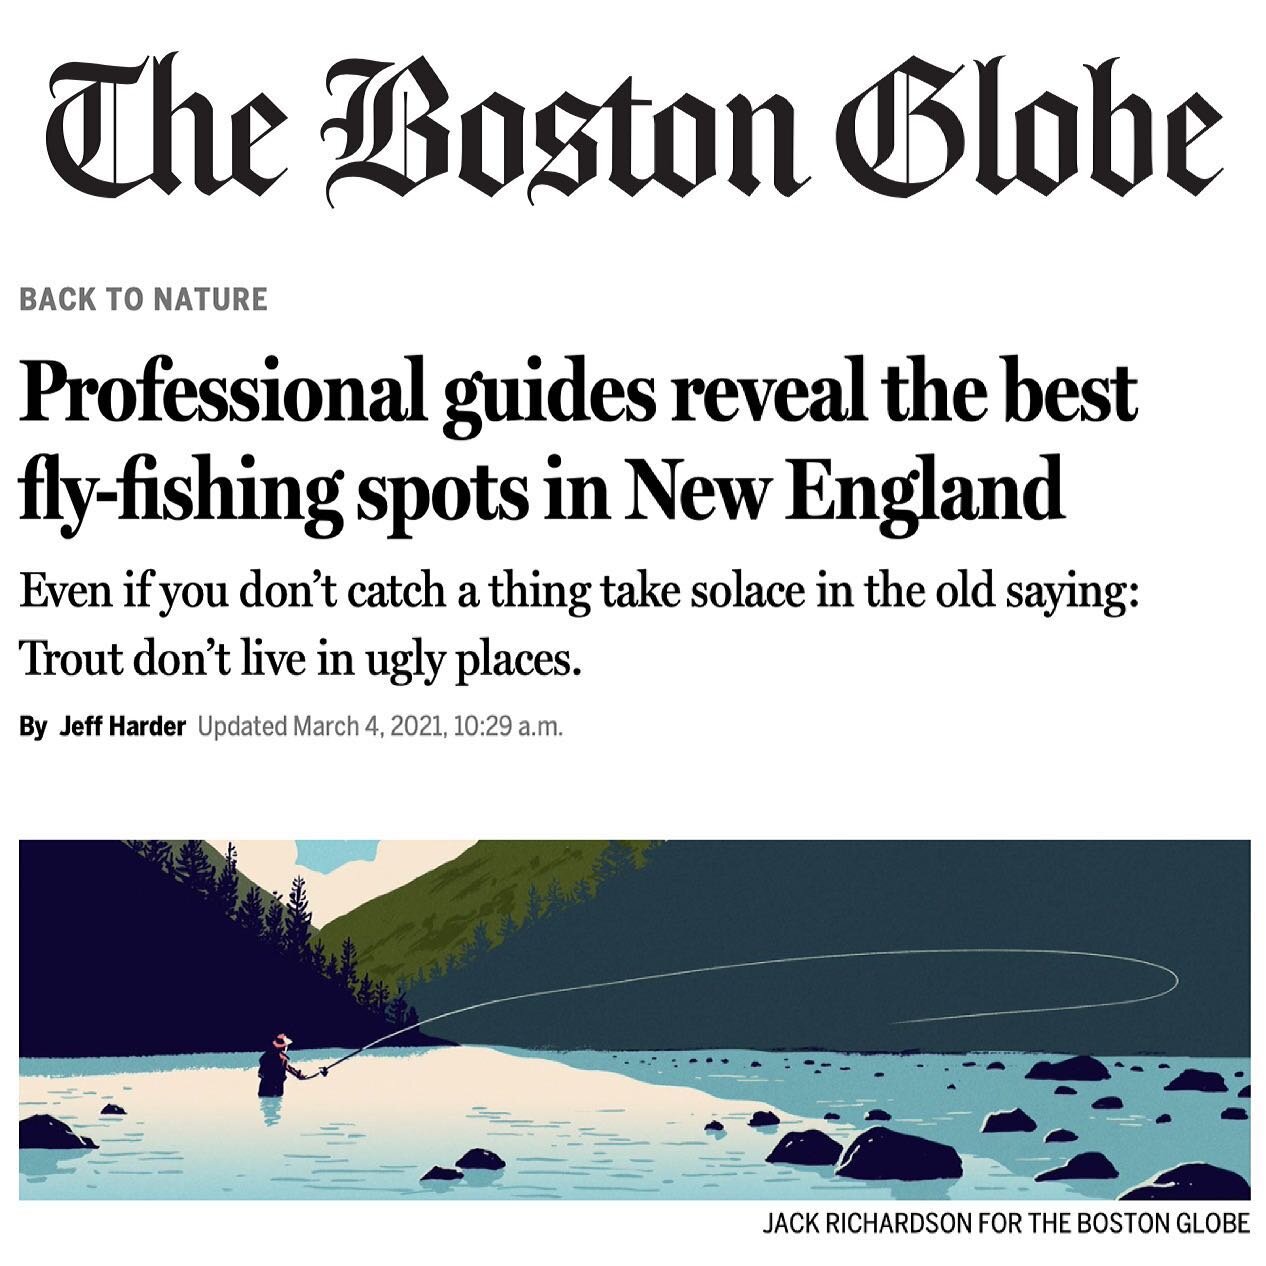 Pheasant Tail Tours in the Boston Globe: https://bit.ly/3qoErt3